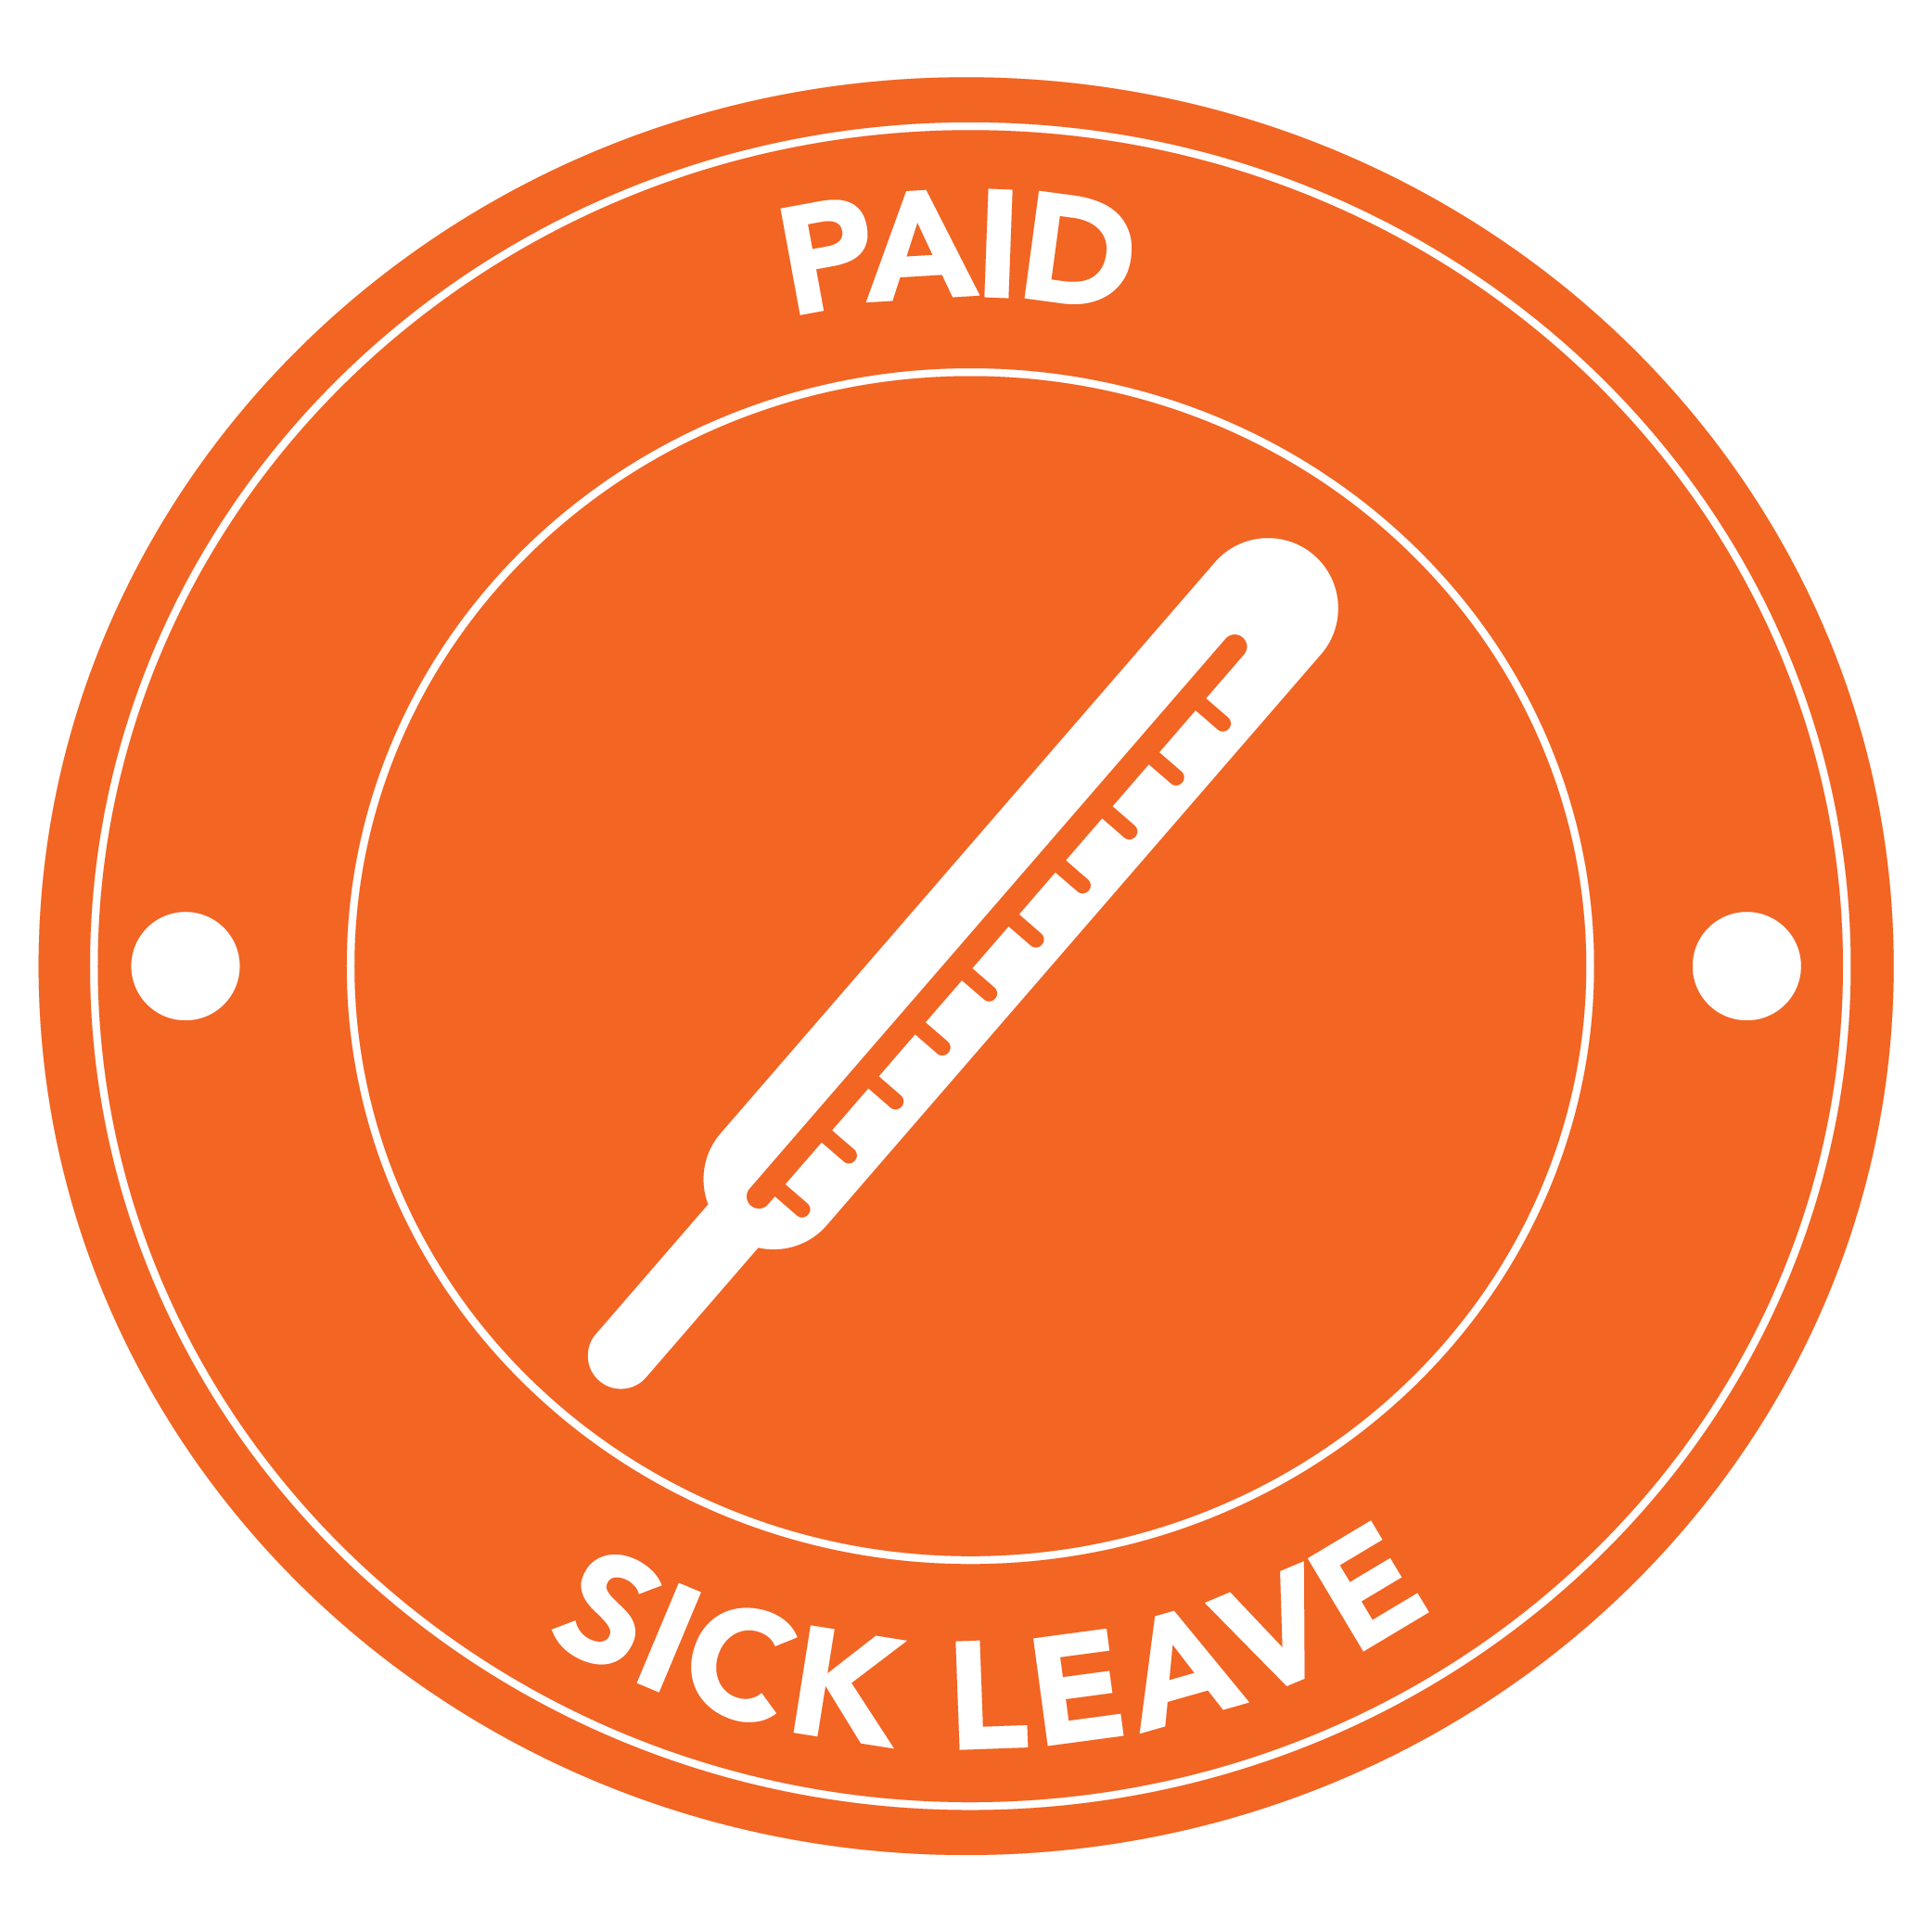 Paid Leave